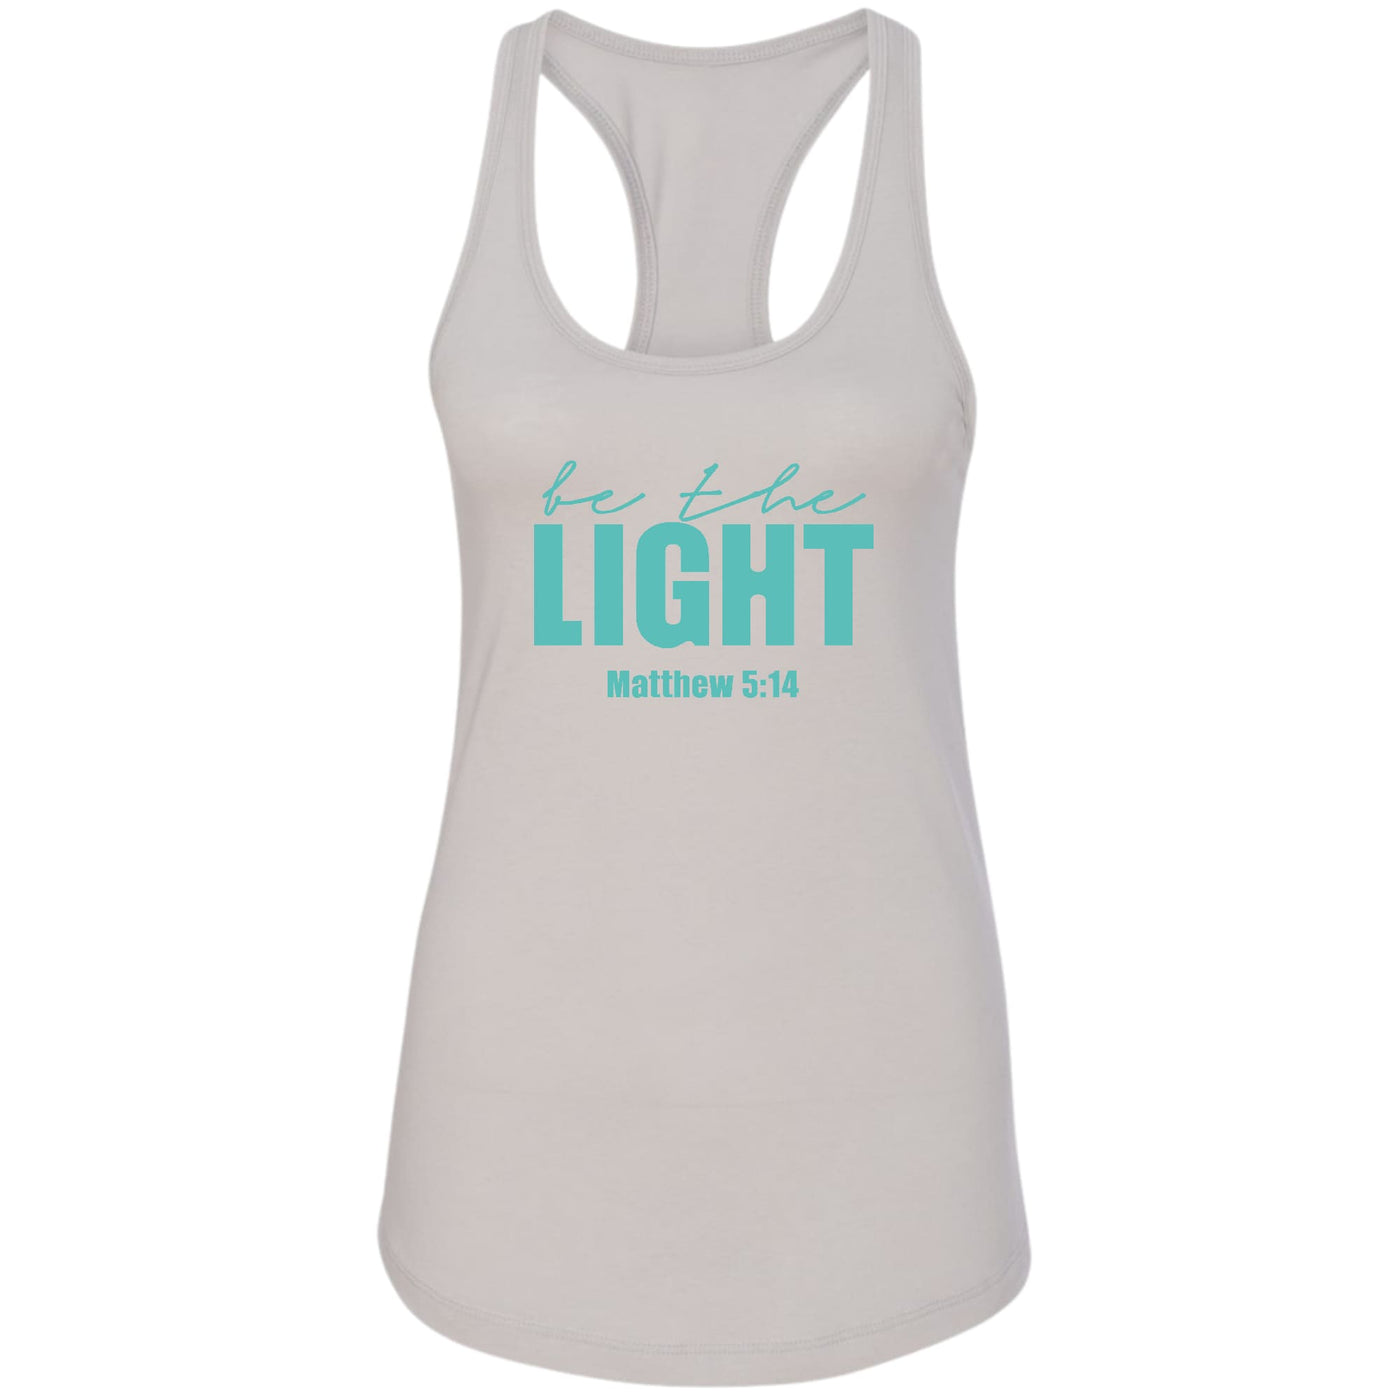 Womens Tank Top Fitness T-shirt Be The Light Print - Tops